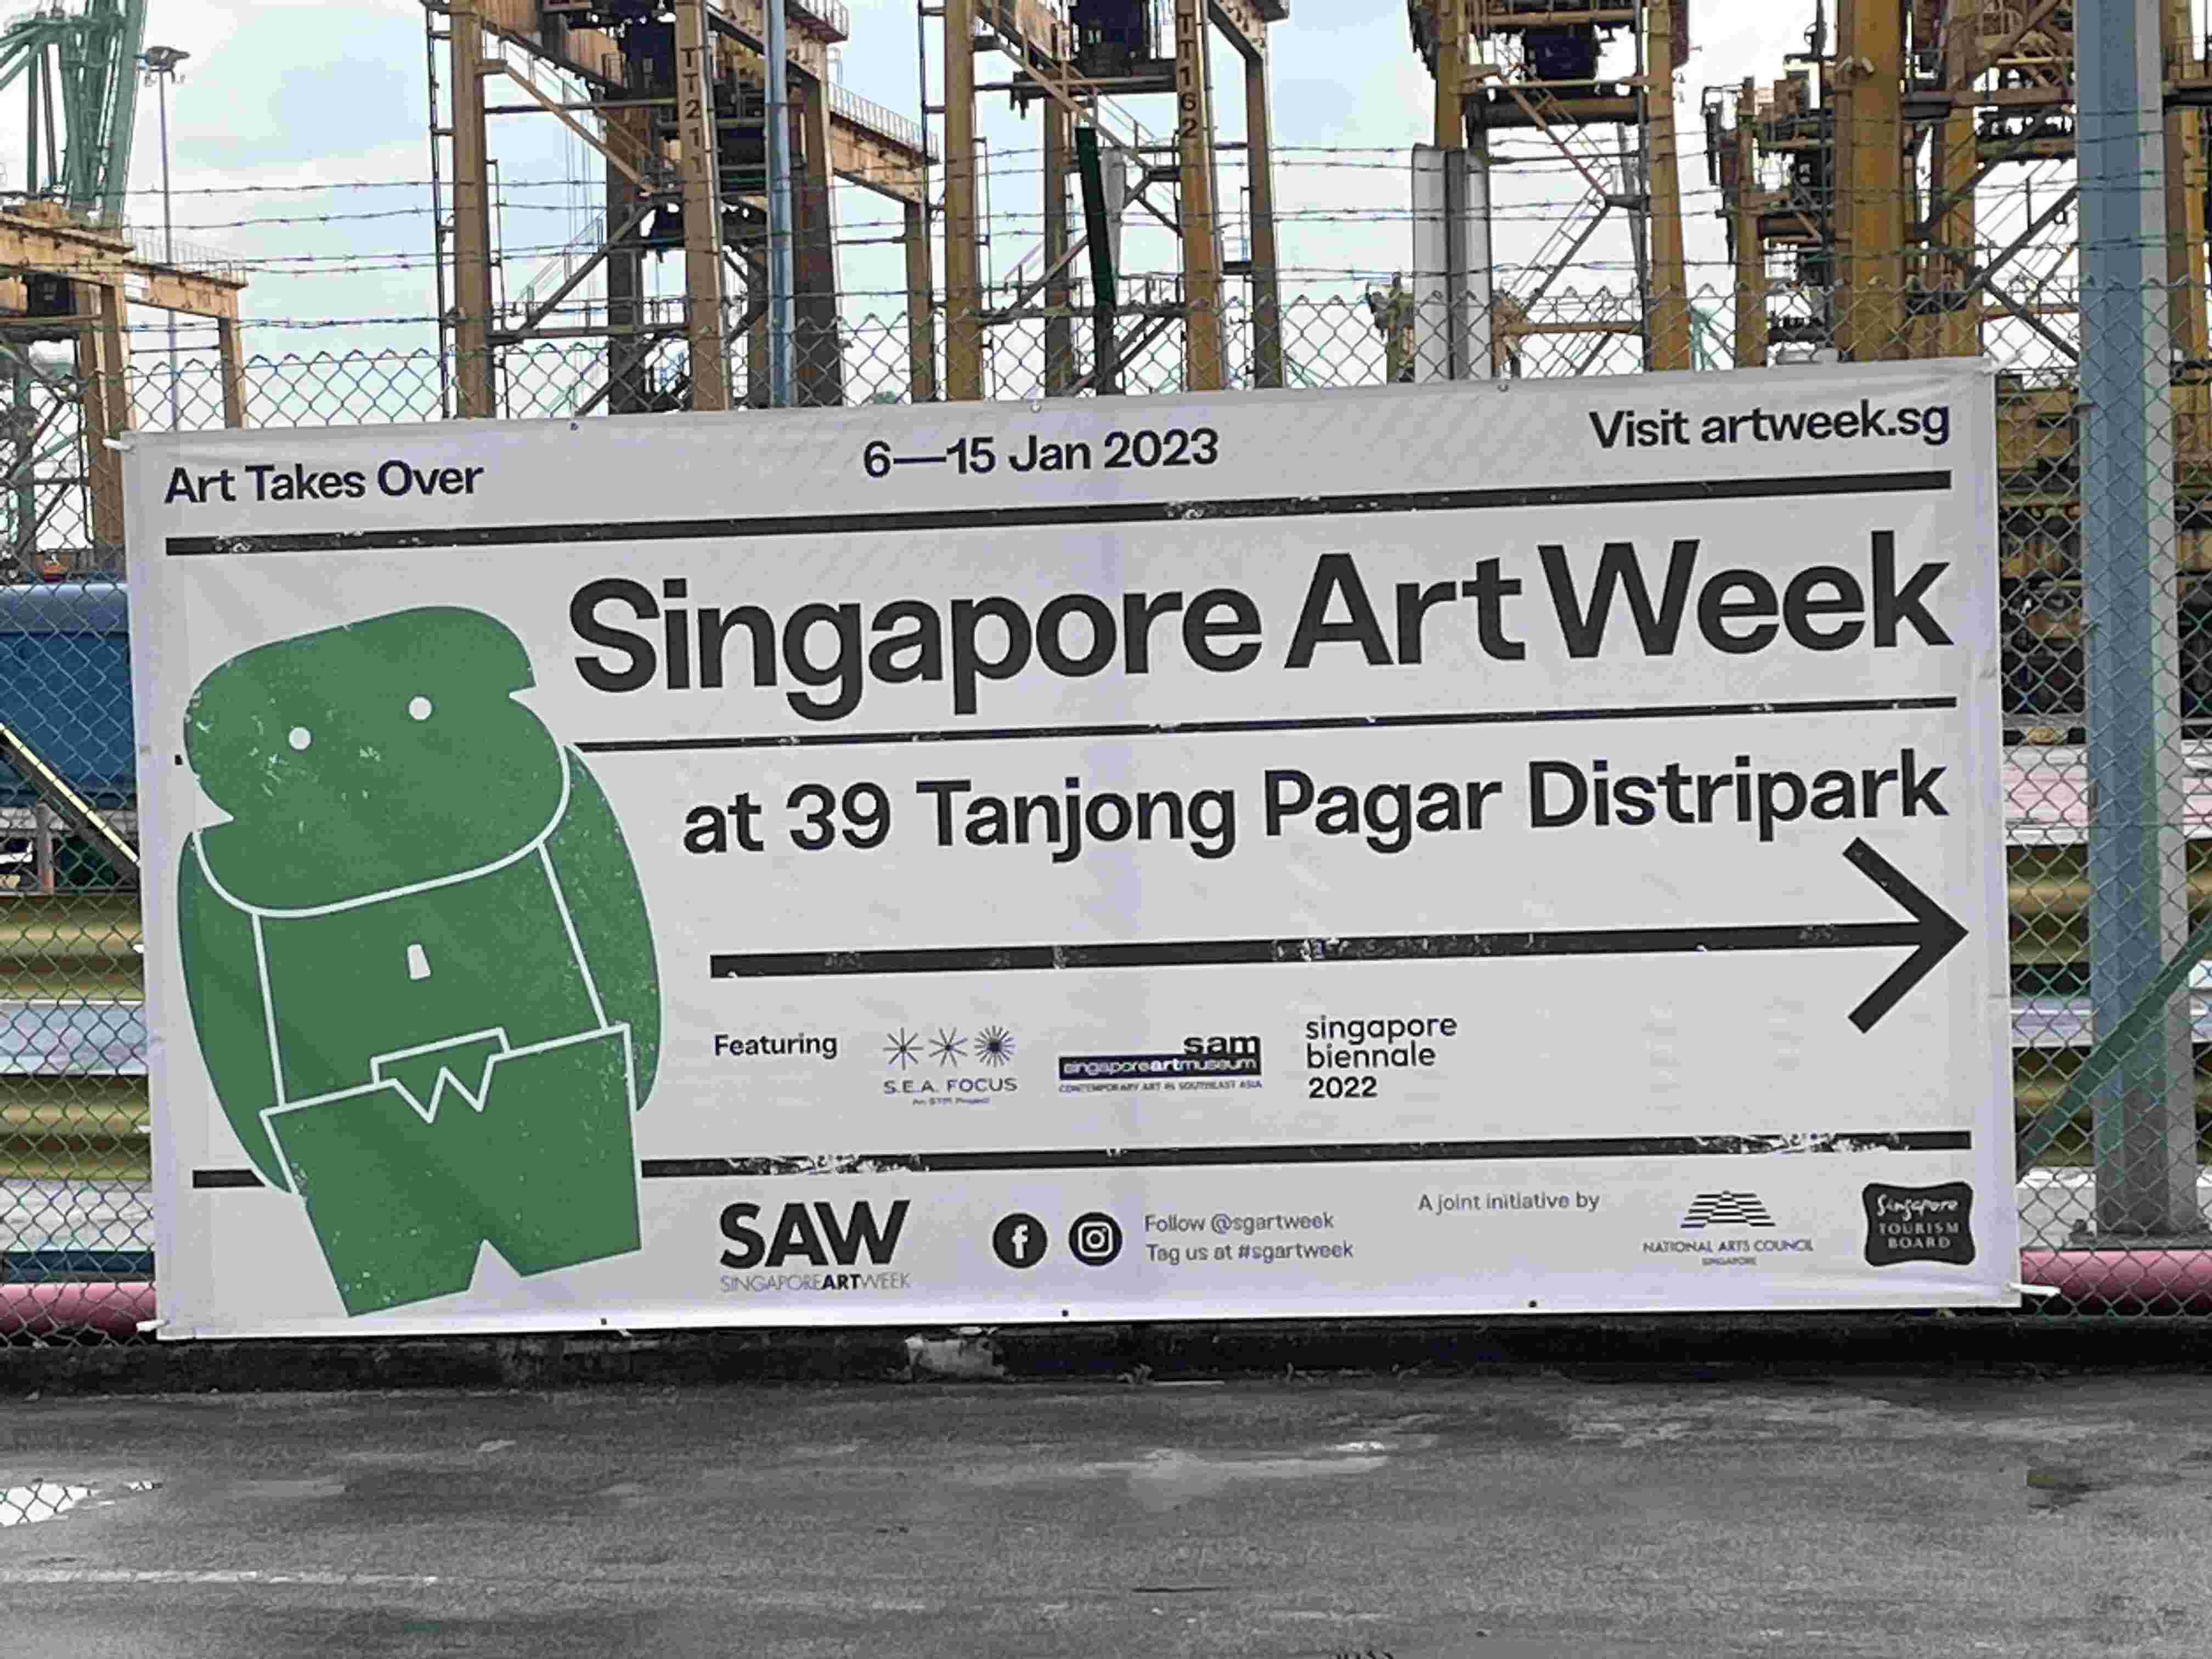 Singapore Art Week at 39 Tanjong Pagar Distripark